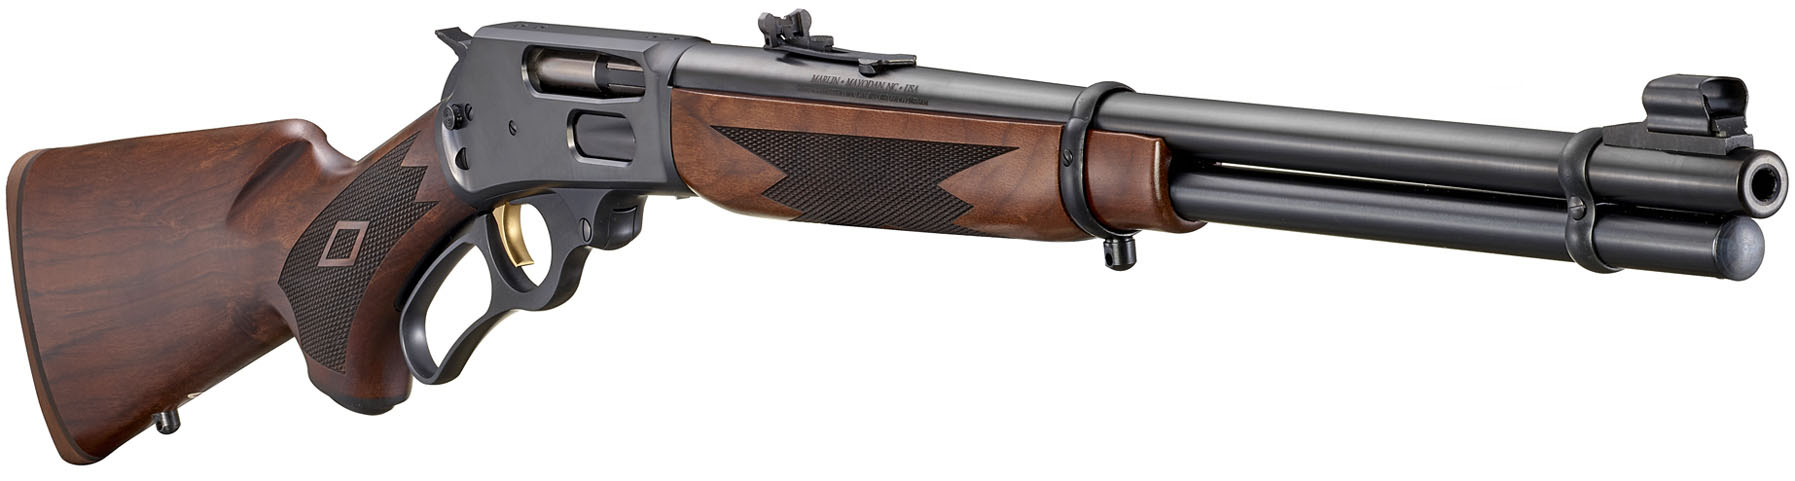 Rifle de palanca MARLIN 336 Classic - 30-30 Win.